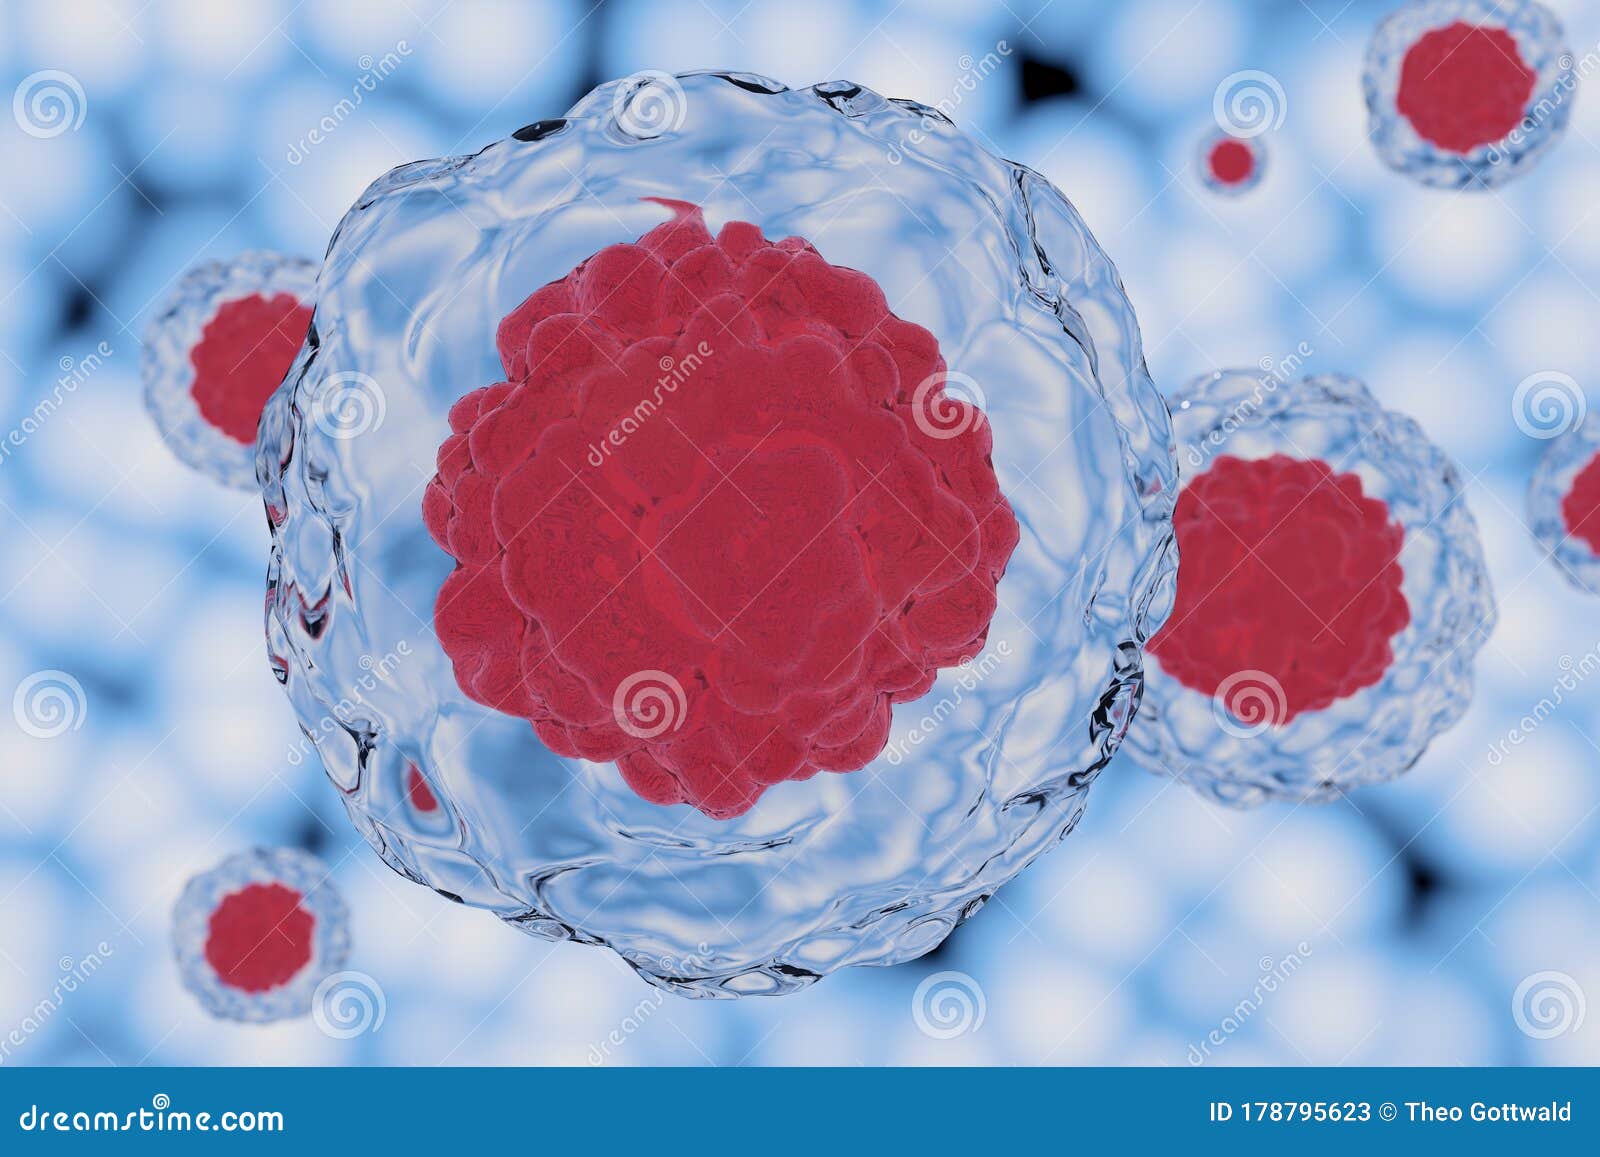 stem cell background